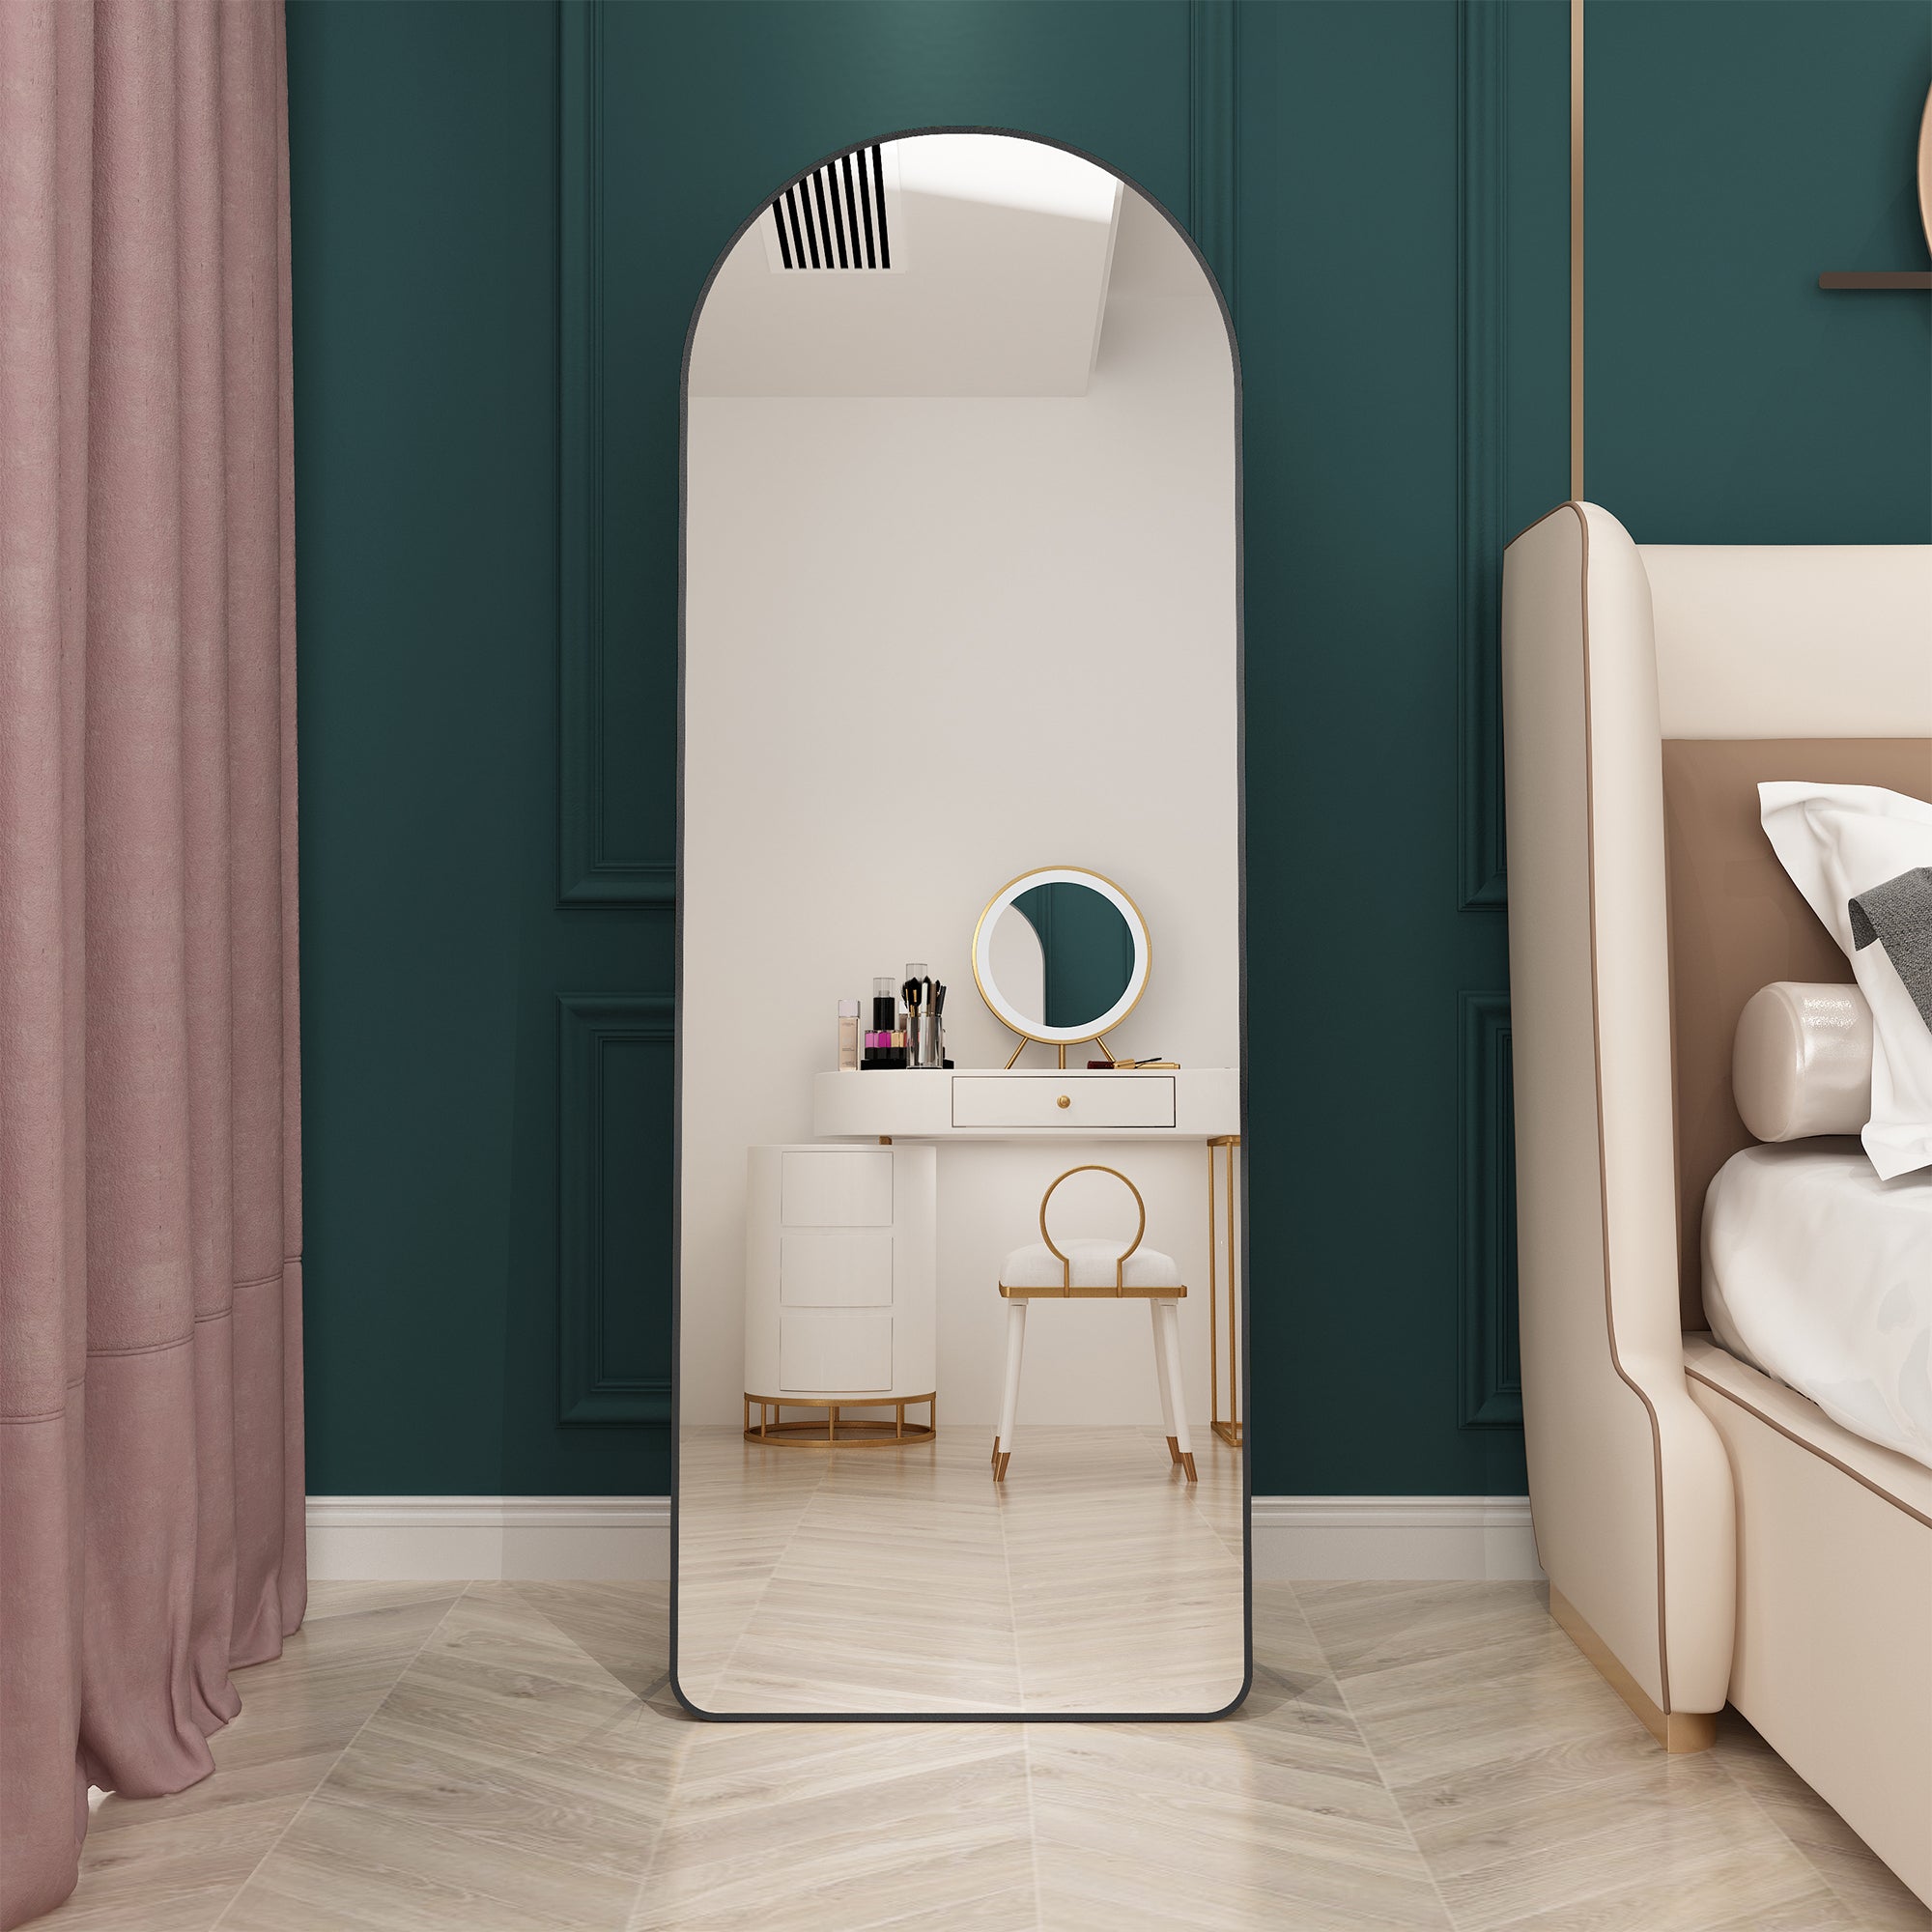 How High Should You Hang a Full Length Mirror? - Mamma Mia's Closet